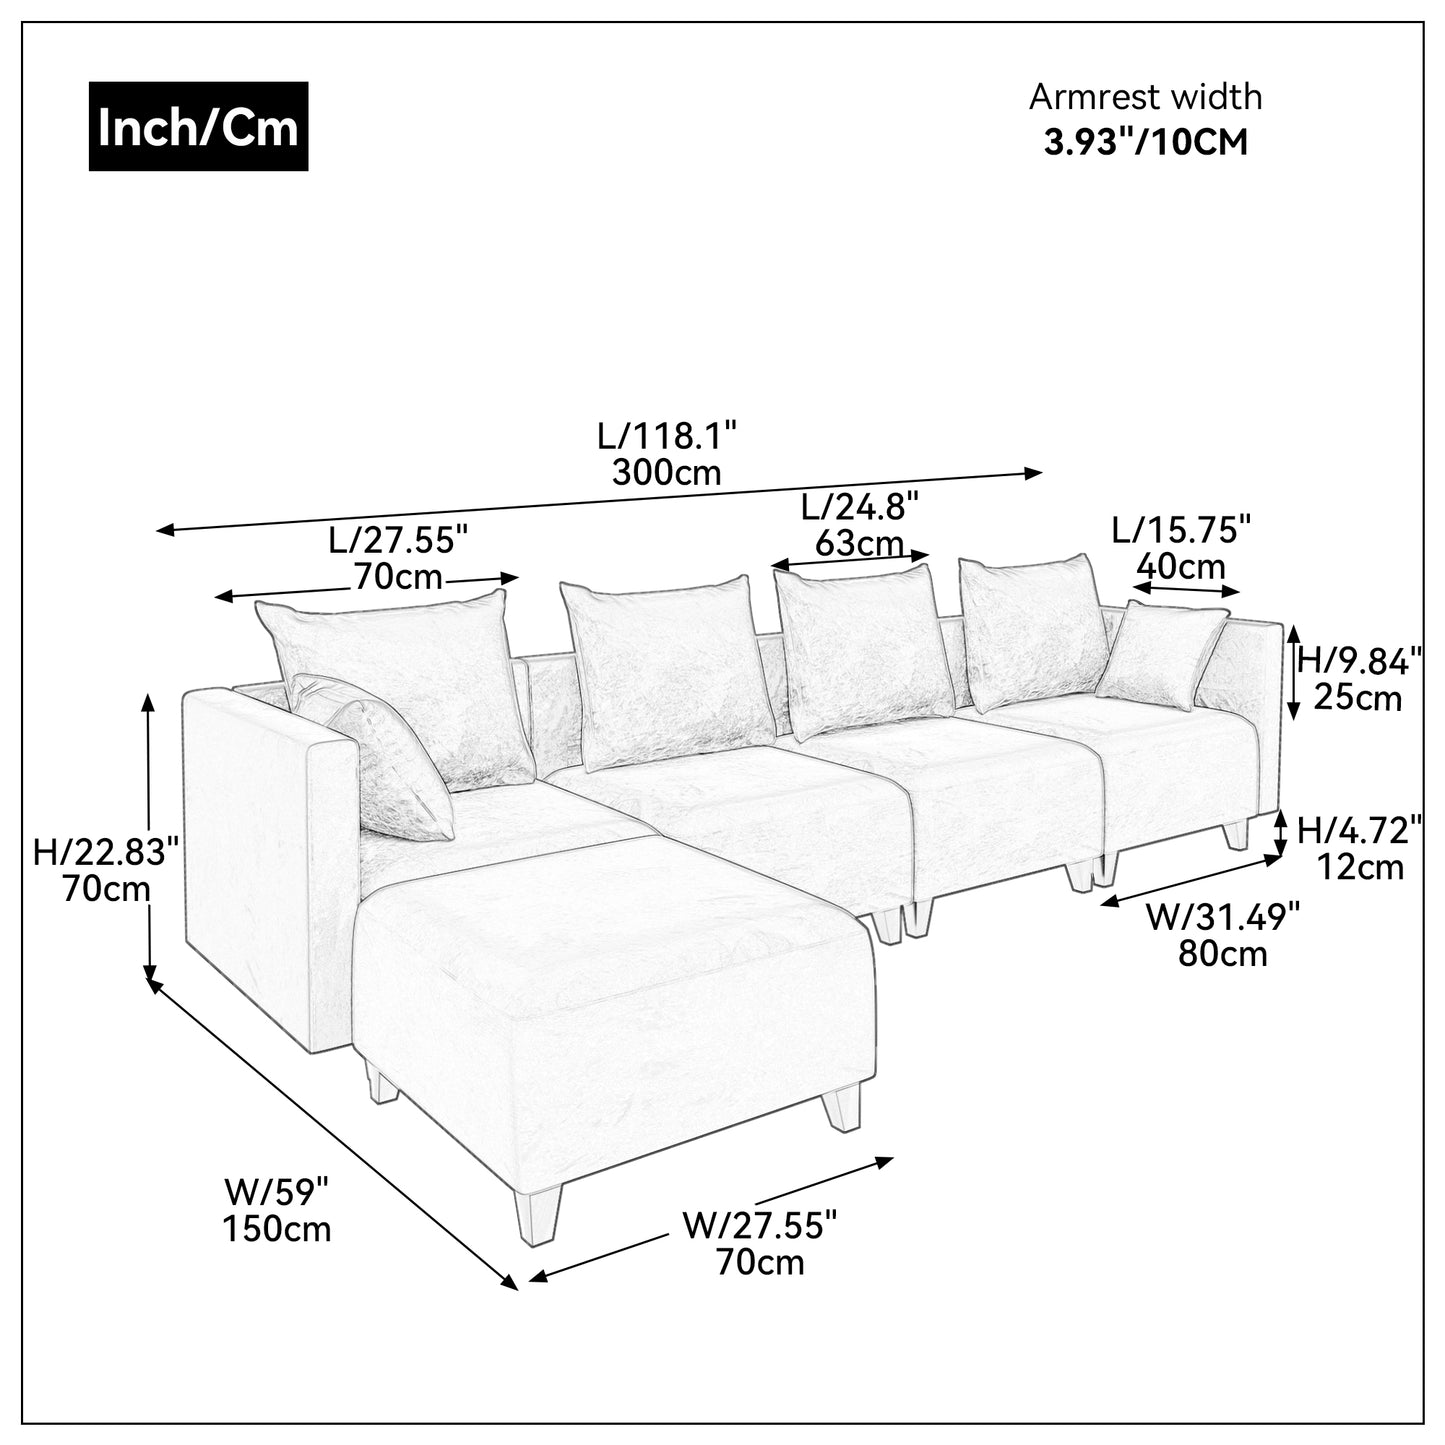 Justone Interior Modern Velvet Fabric Modular Sectional Sofa - Gray